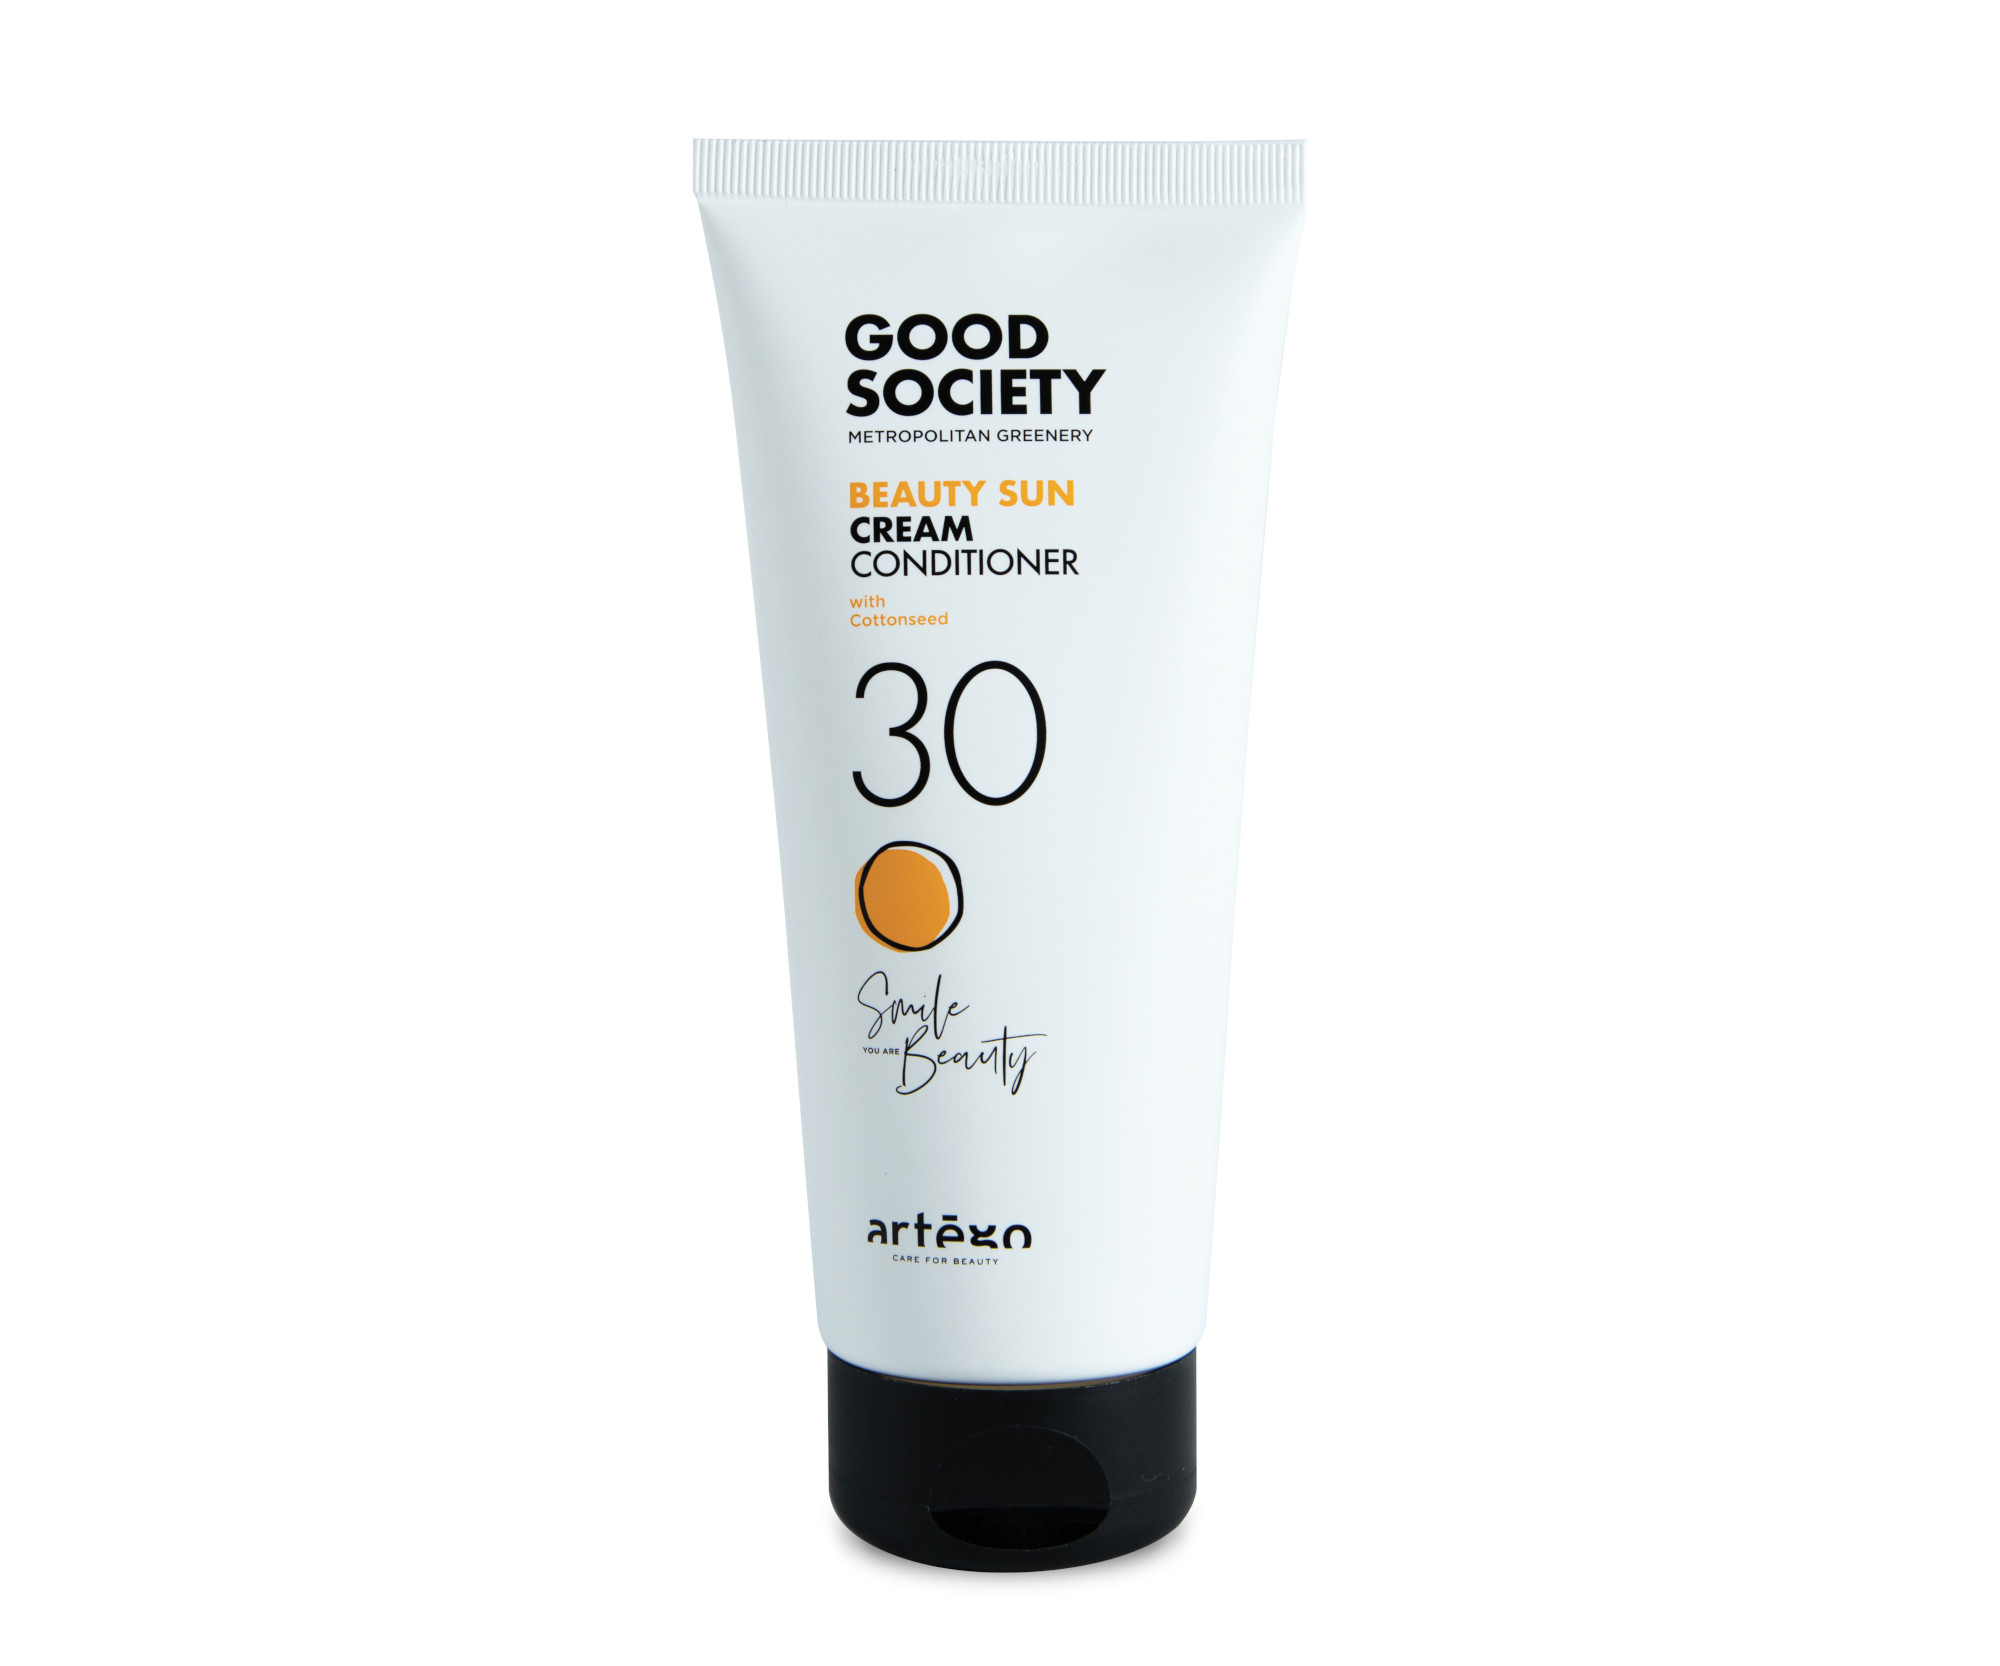 Kondicionér pro ochranu vlasů proti slunci Artégo Good Society Beauty Sun Cream Conditioner - 200 ml (0165971) + dárek zdarma